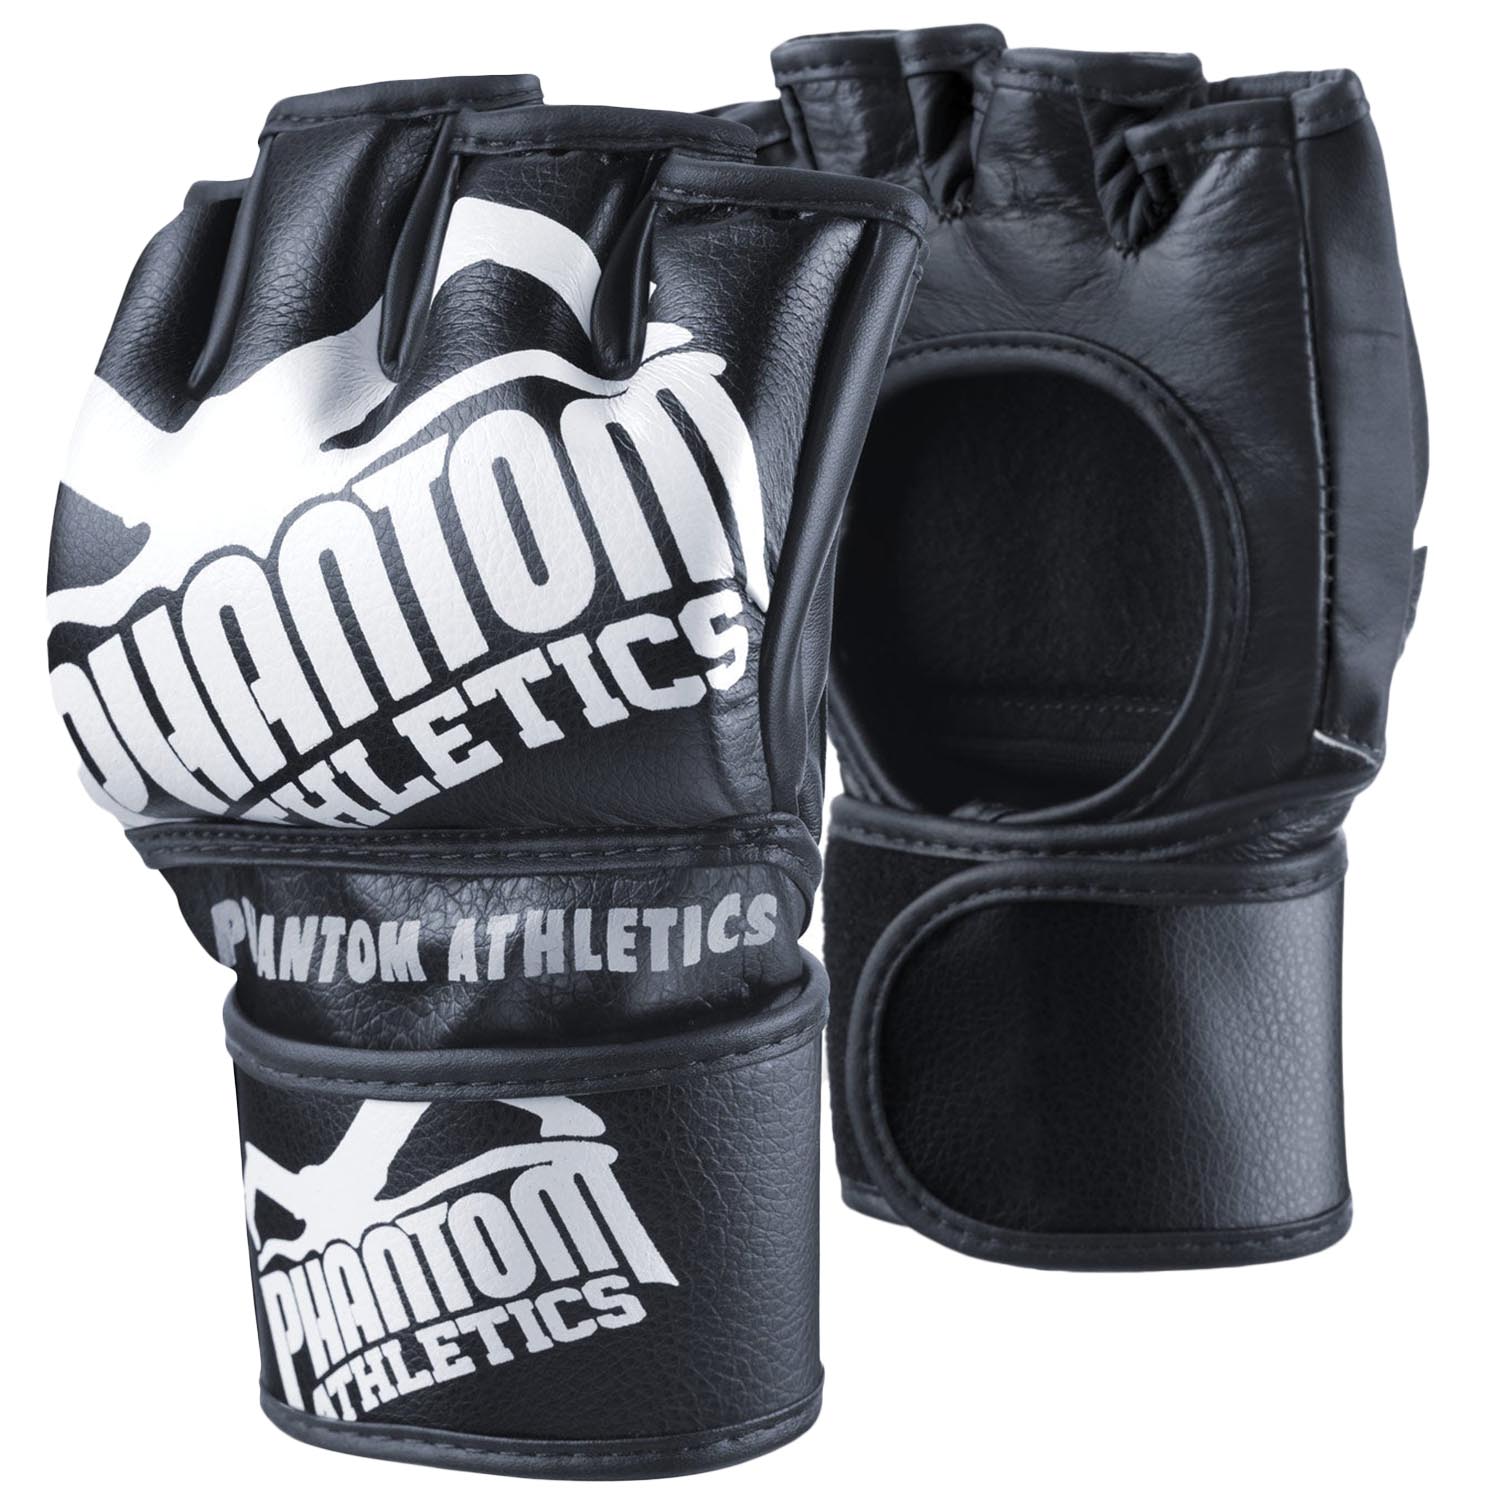 Phantom Athletics MMA Boxing Gloves, blackout, S/M